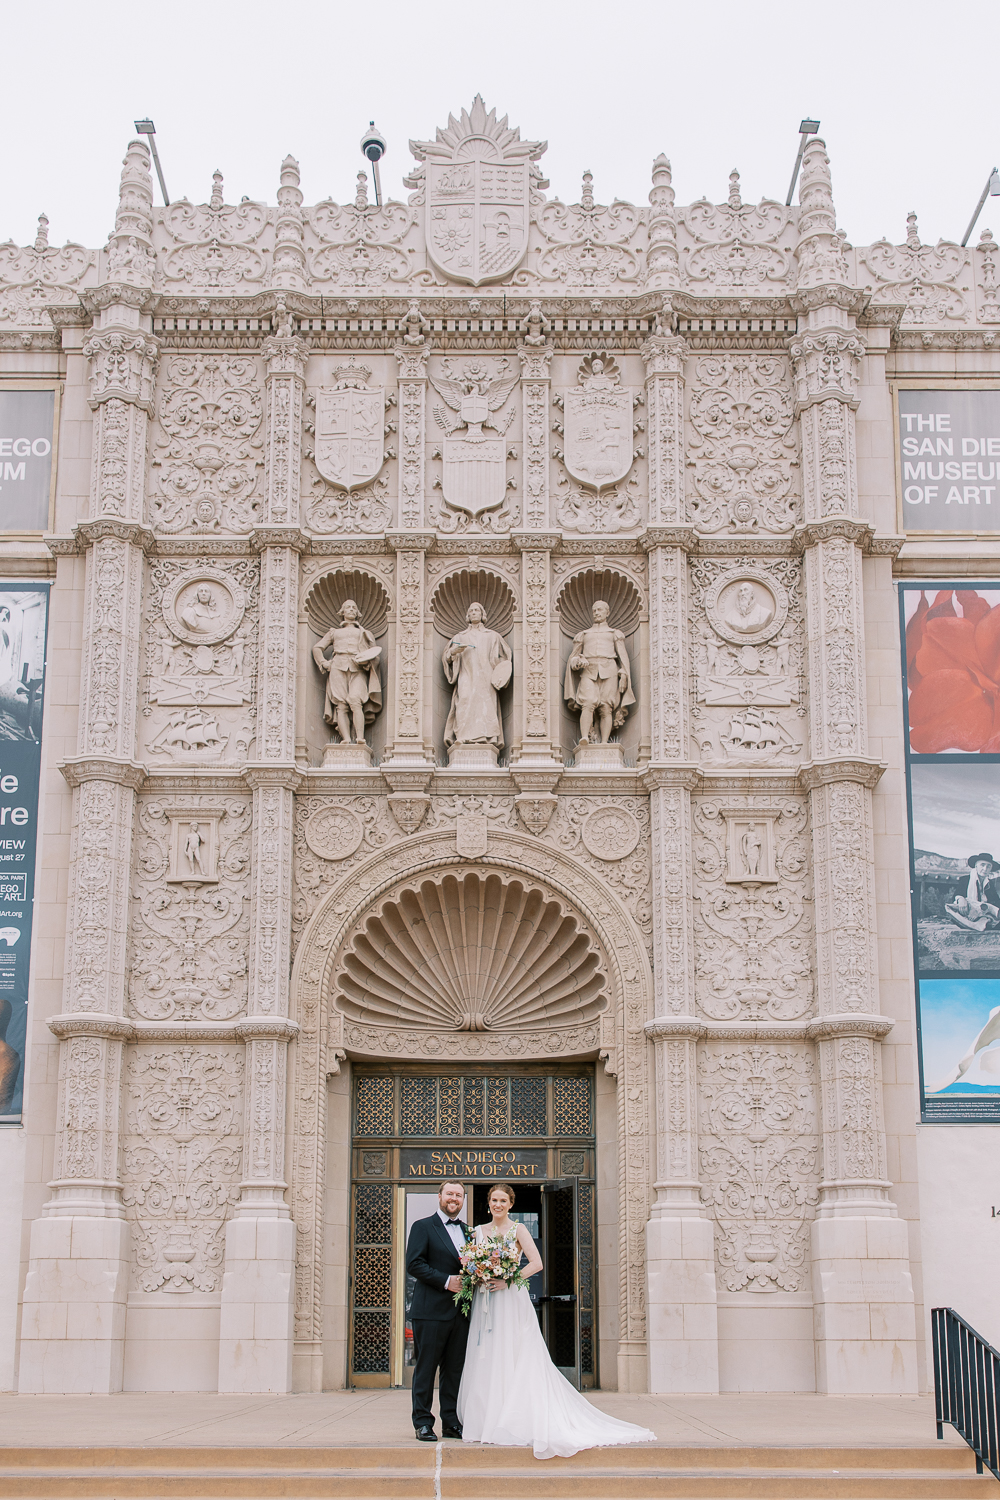 San Diego Museum of Art wedding entrance